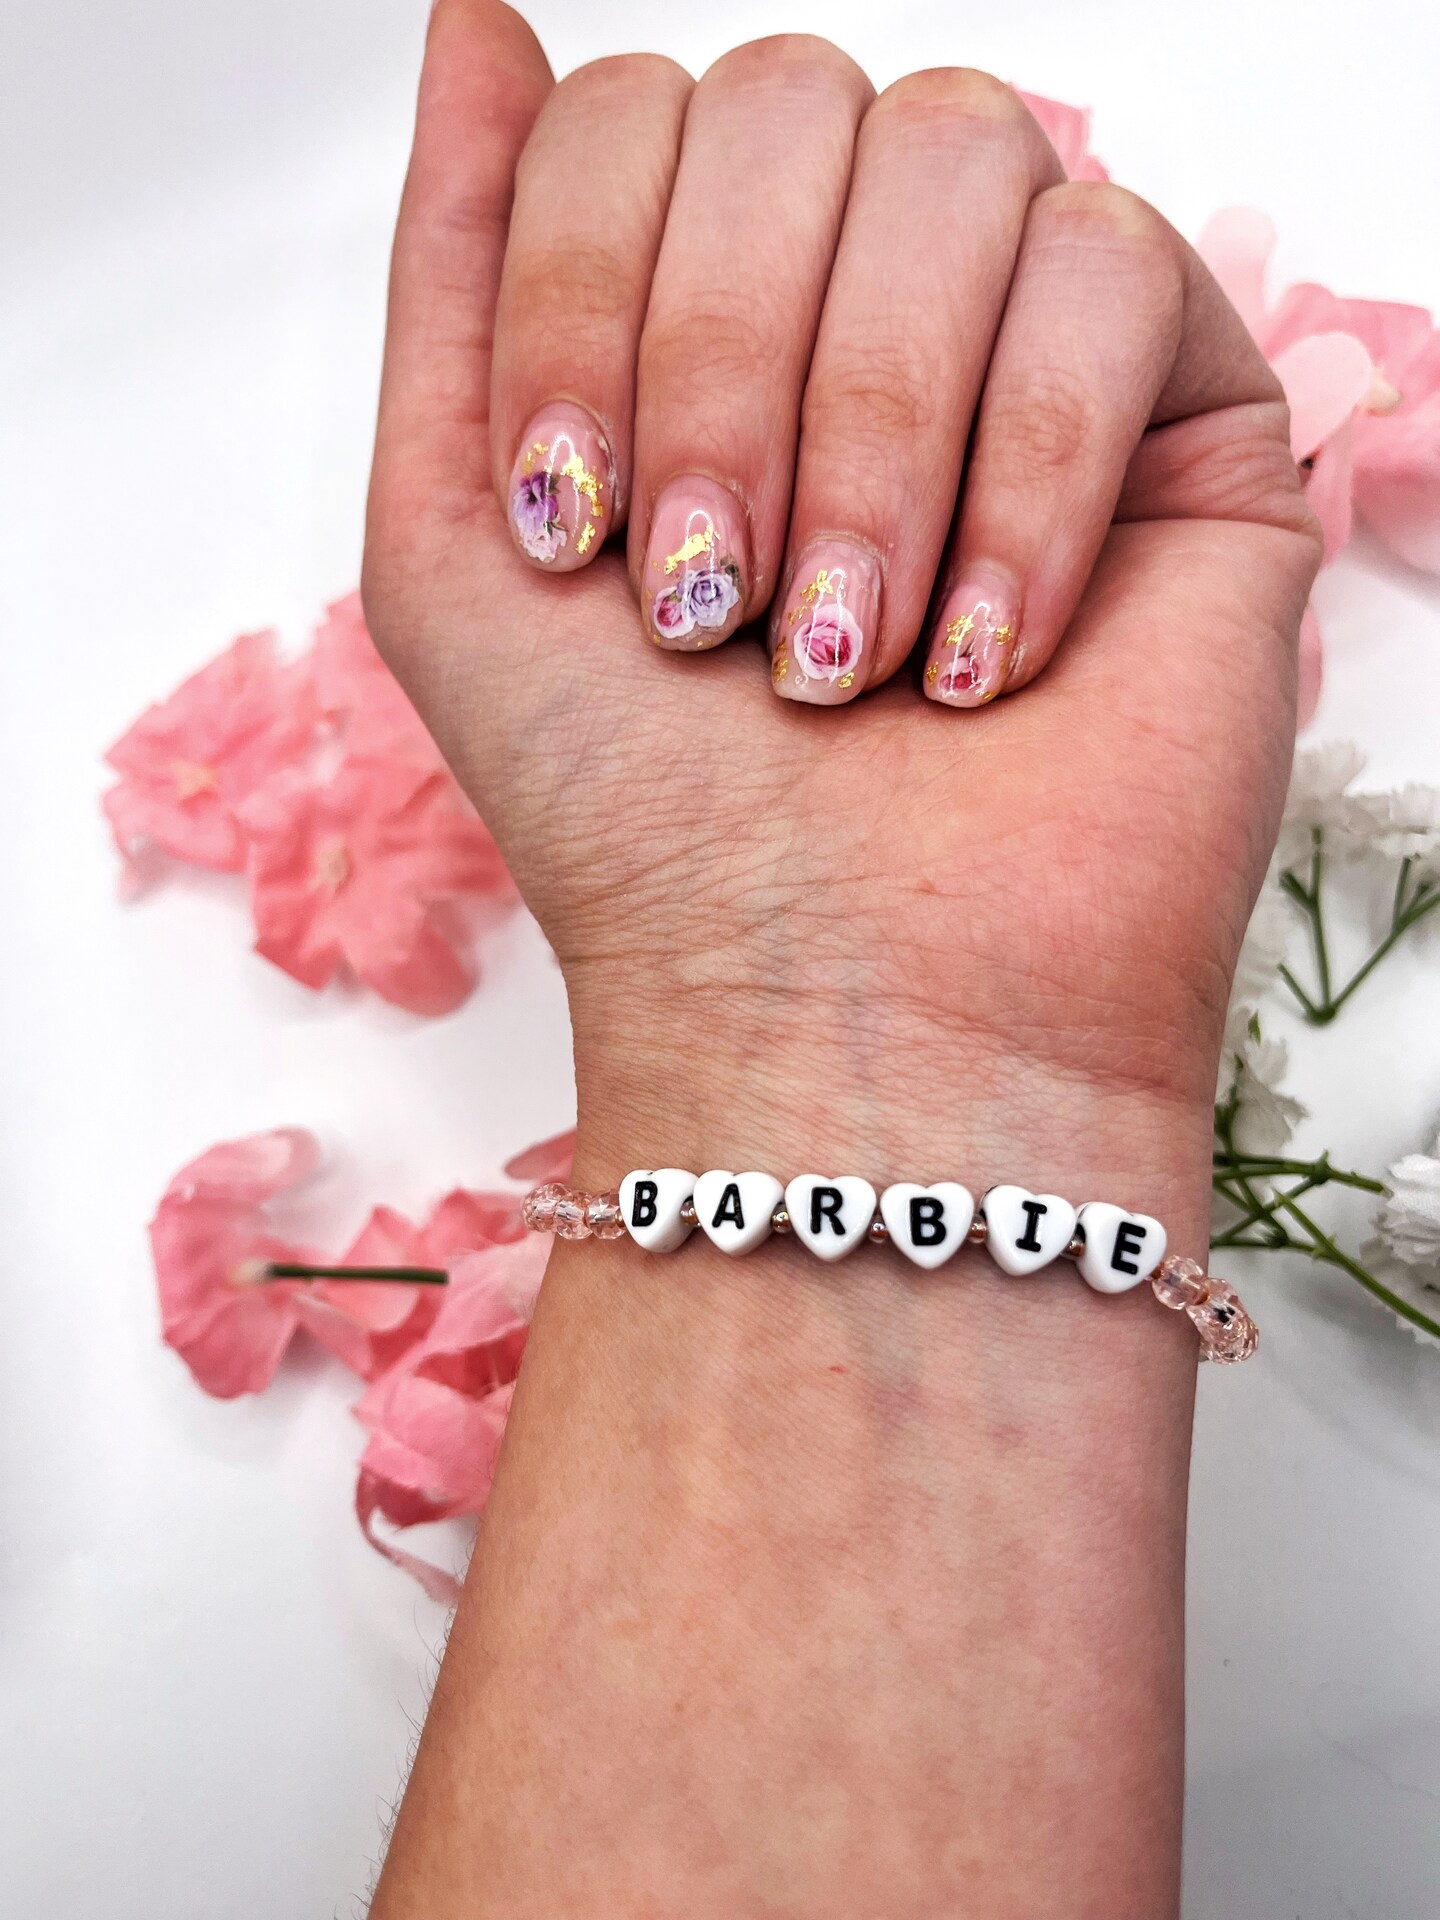 Making personalized word bracelets